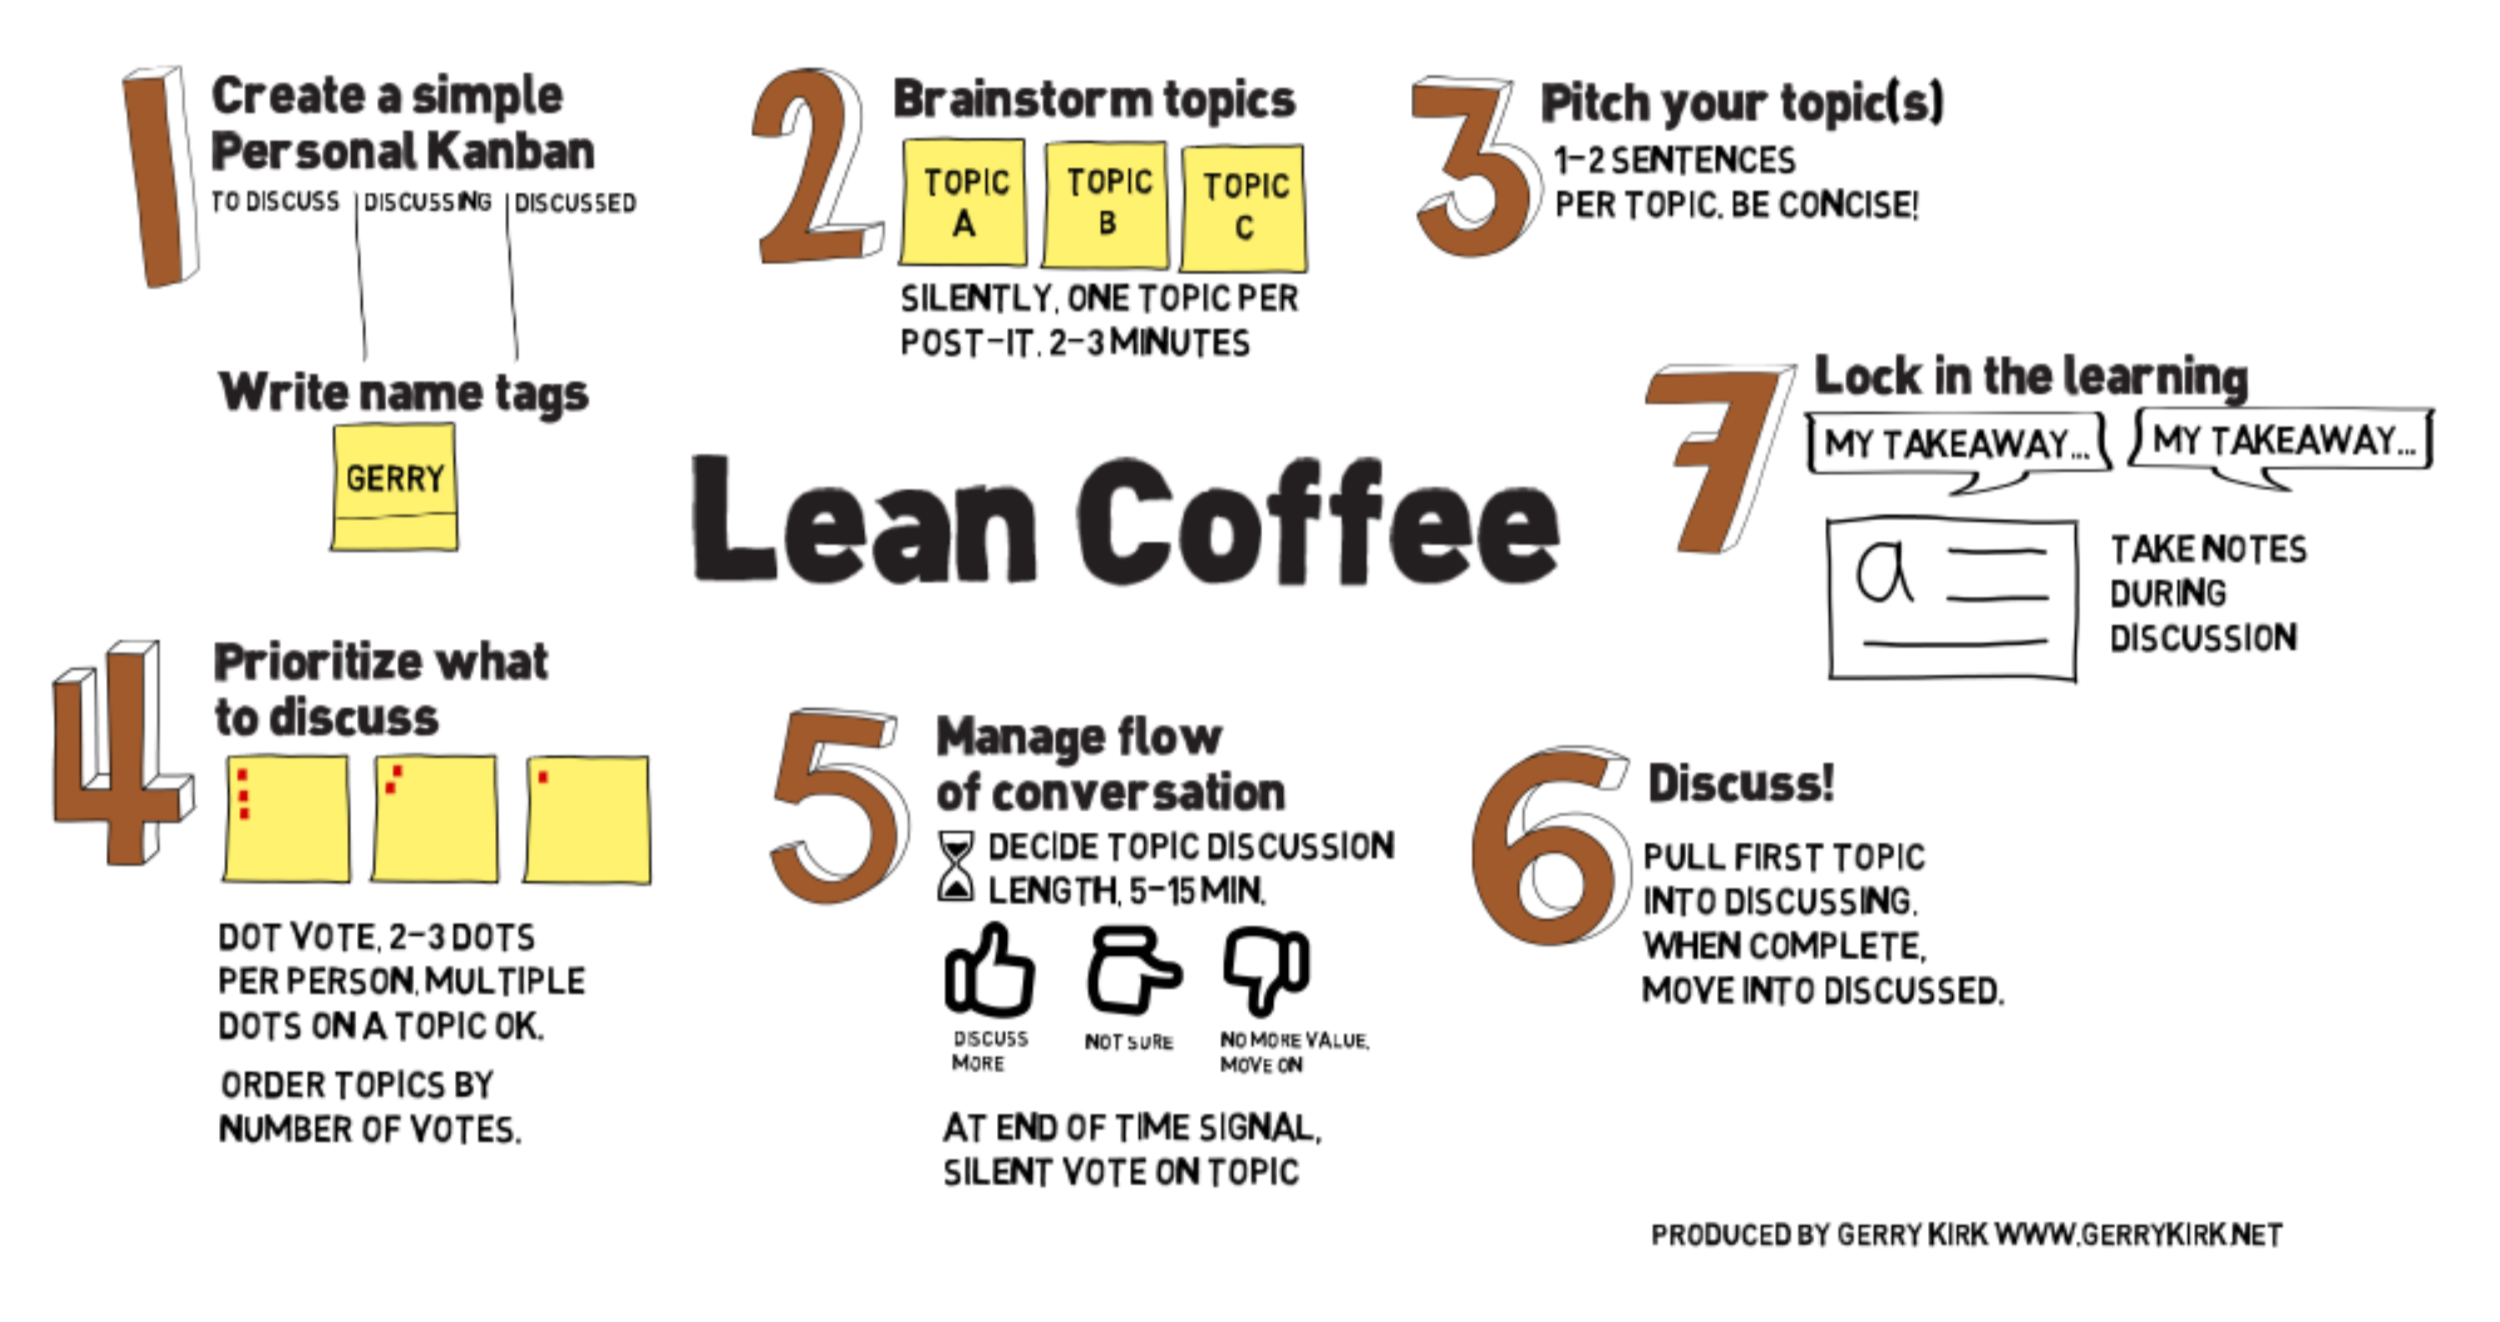 Lean Coffee steps